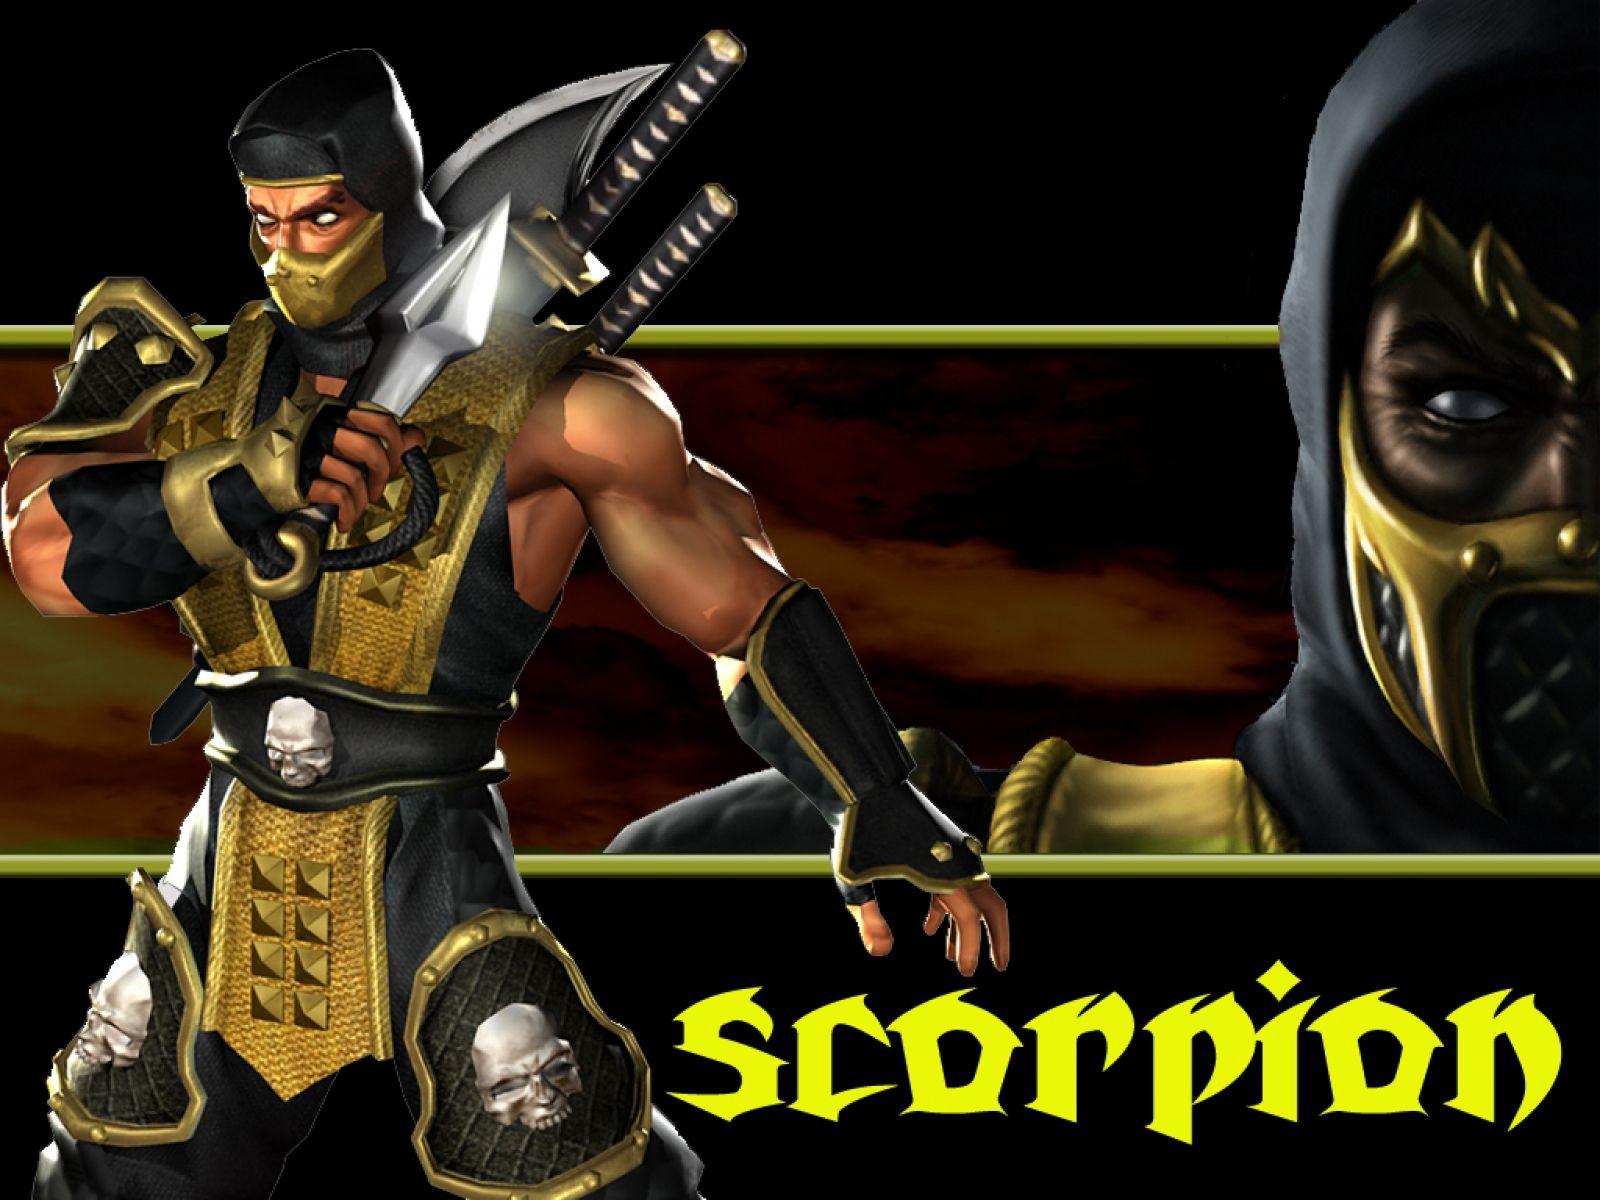 Scorpion MK Wallpaper